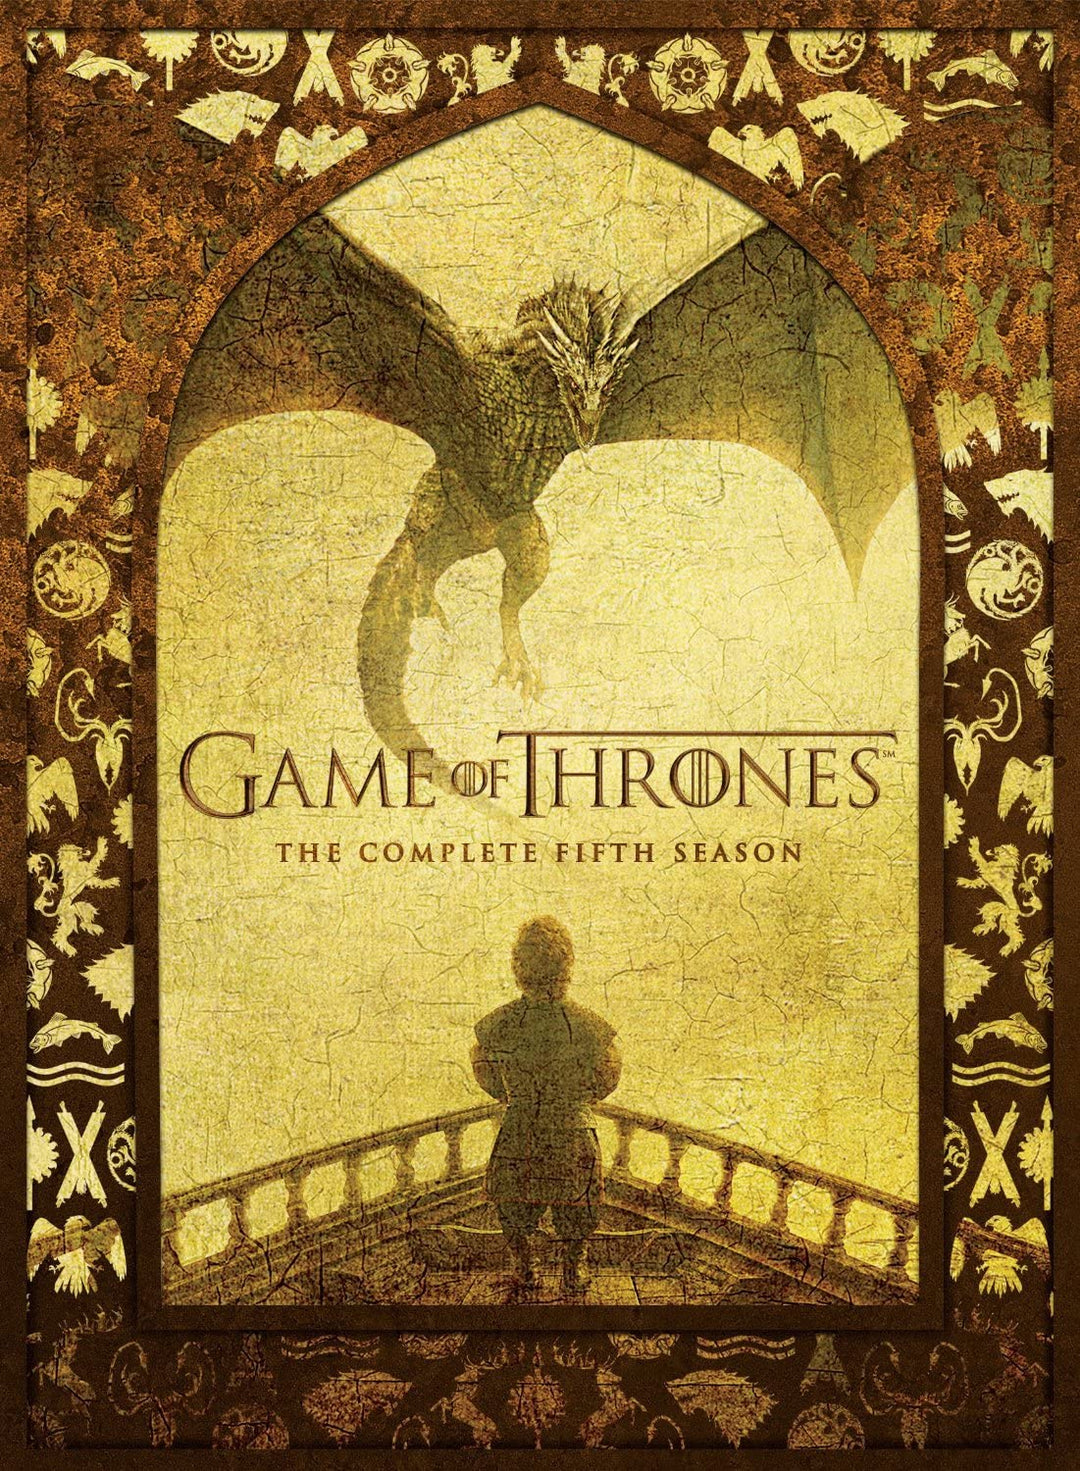 Game of Thrones - Staffel 5 [DVD]